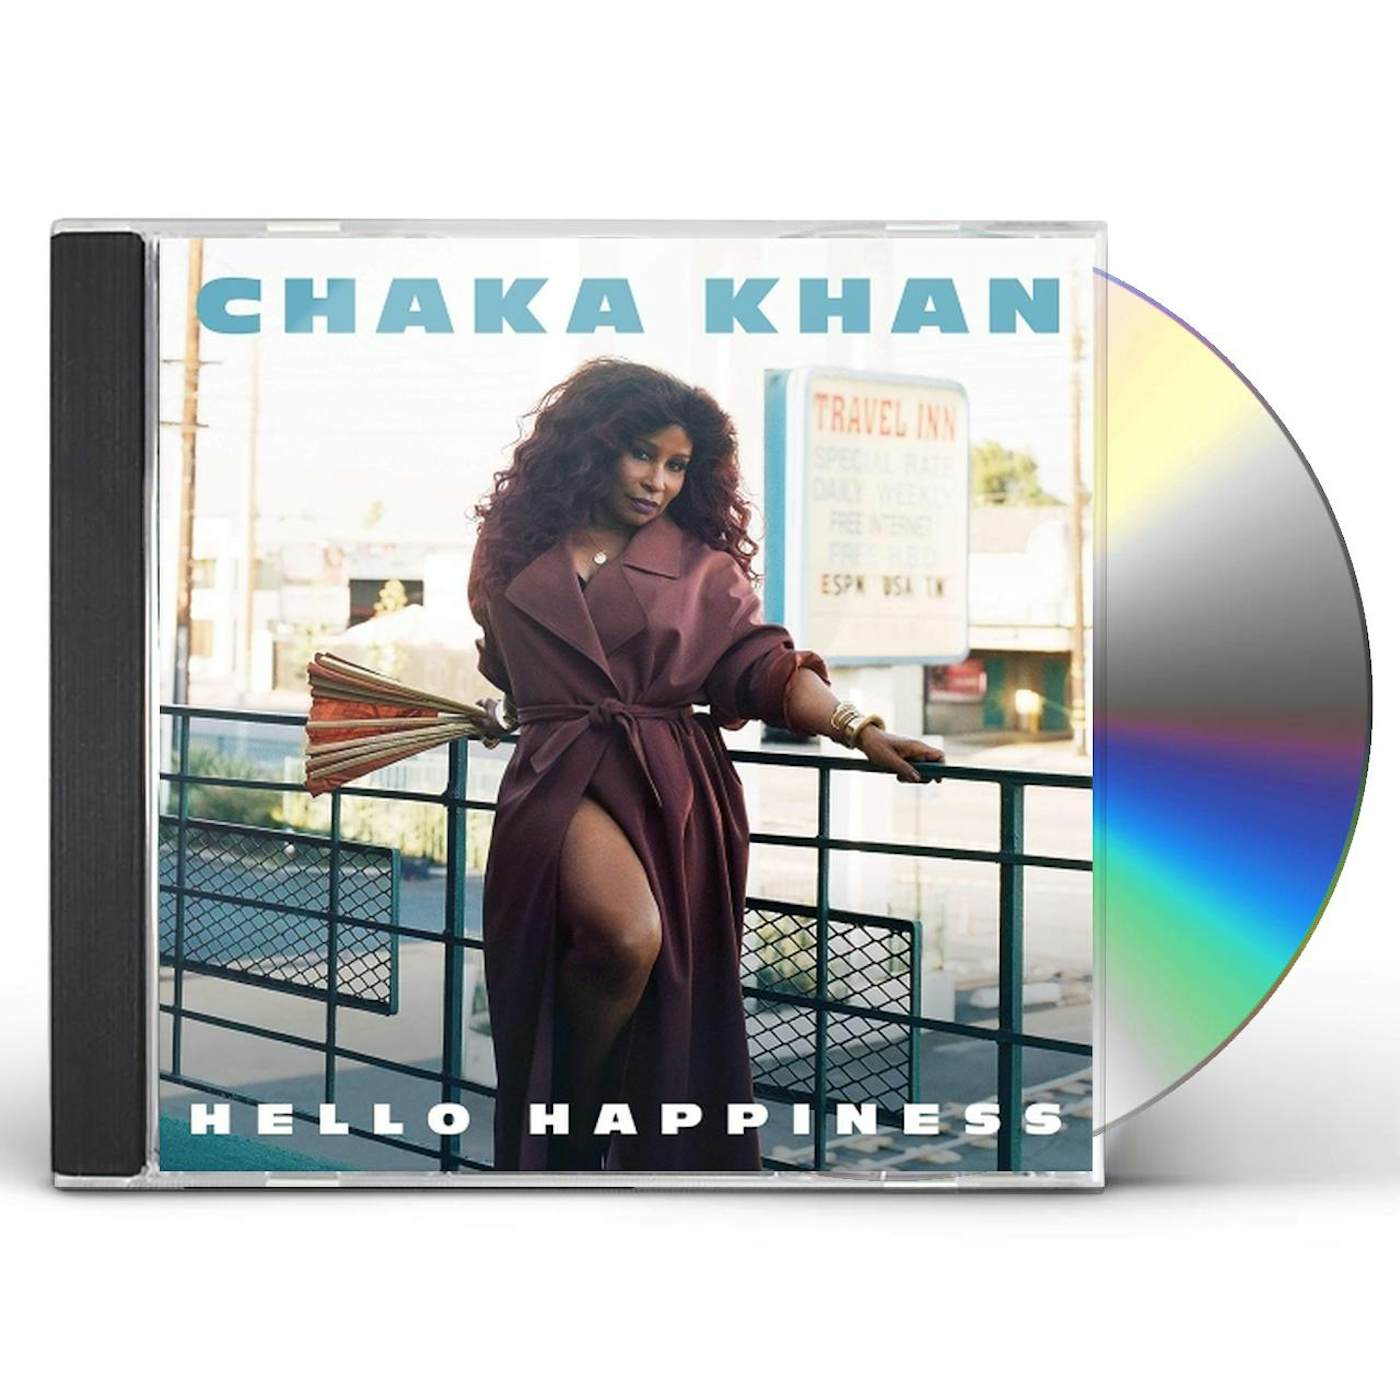 Chaka Khan HELLO HAPPINESS CD